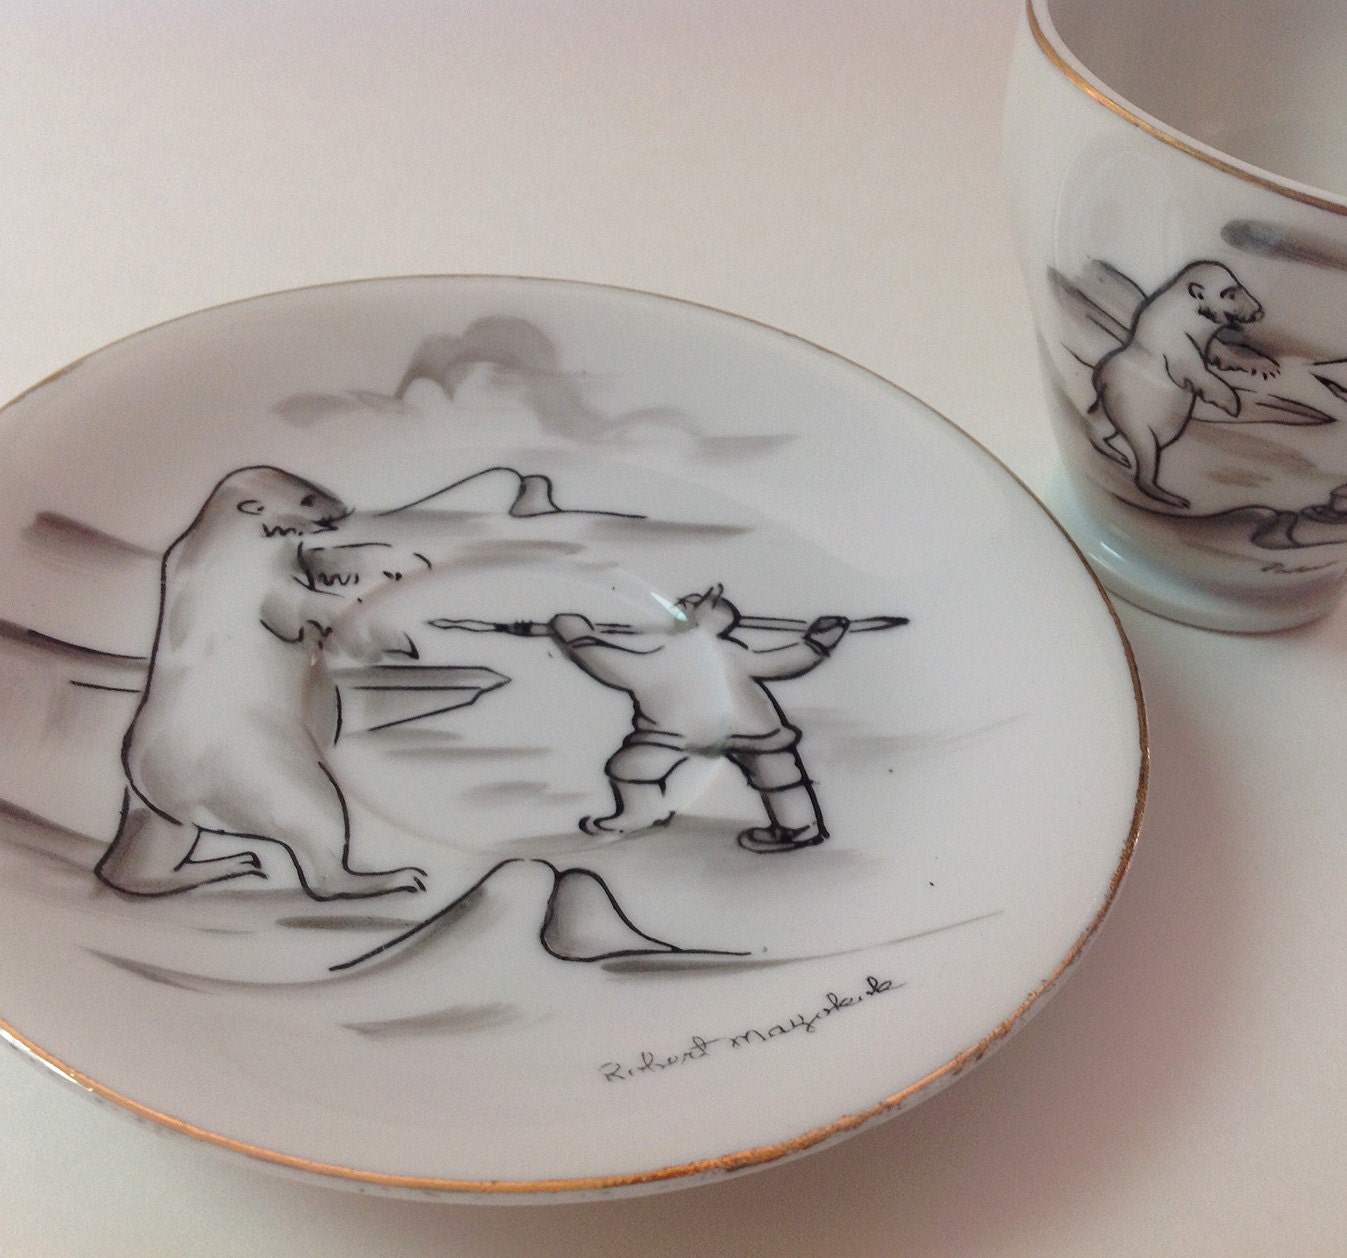 Eskimo and Polar Bear Plate by Robert Mayokok Made in Japan